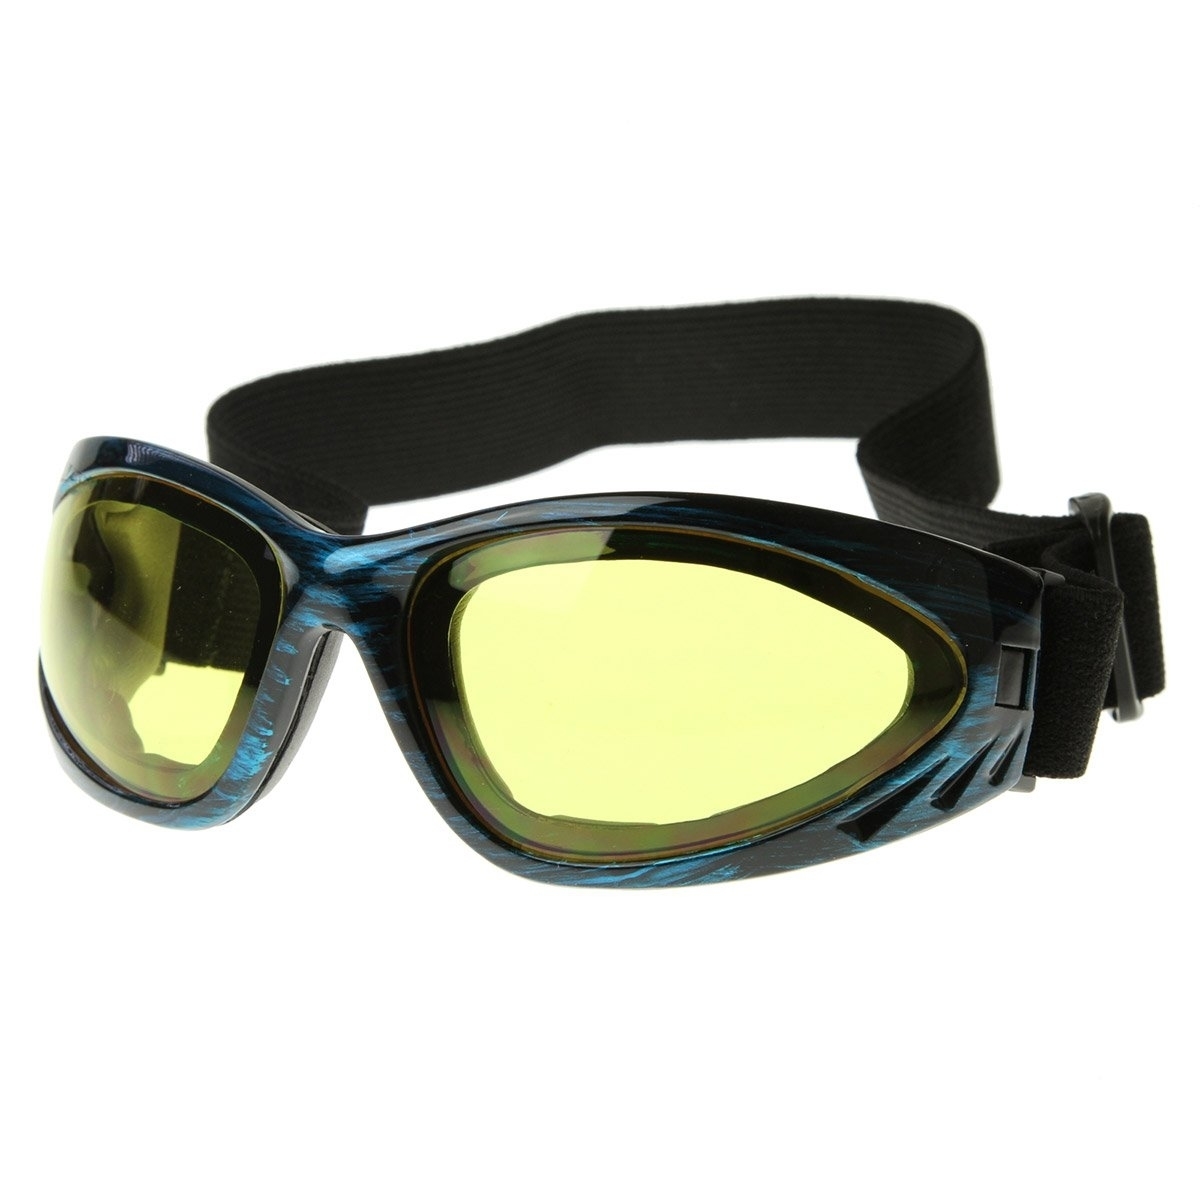 Active Multi-Purpose Riding/Sports Goggles - Shiny Black - Yellow